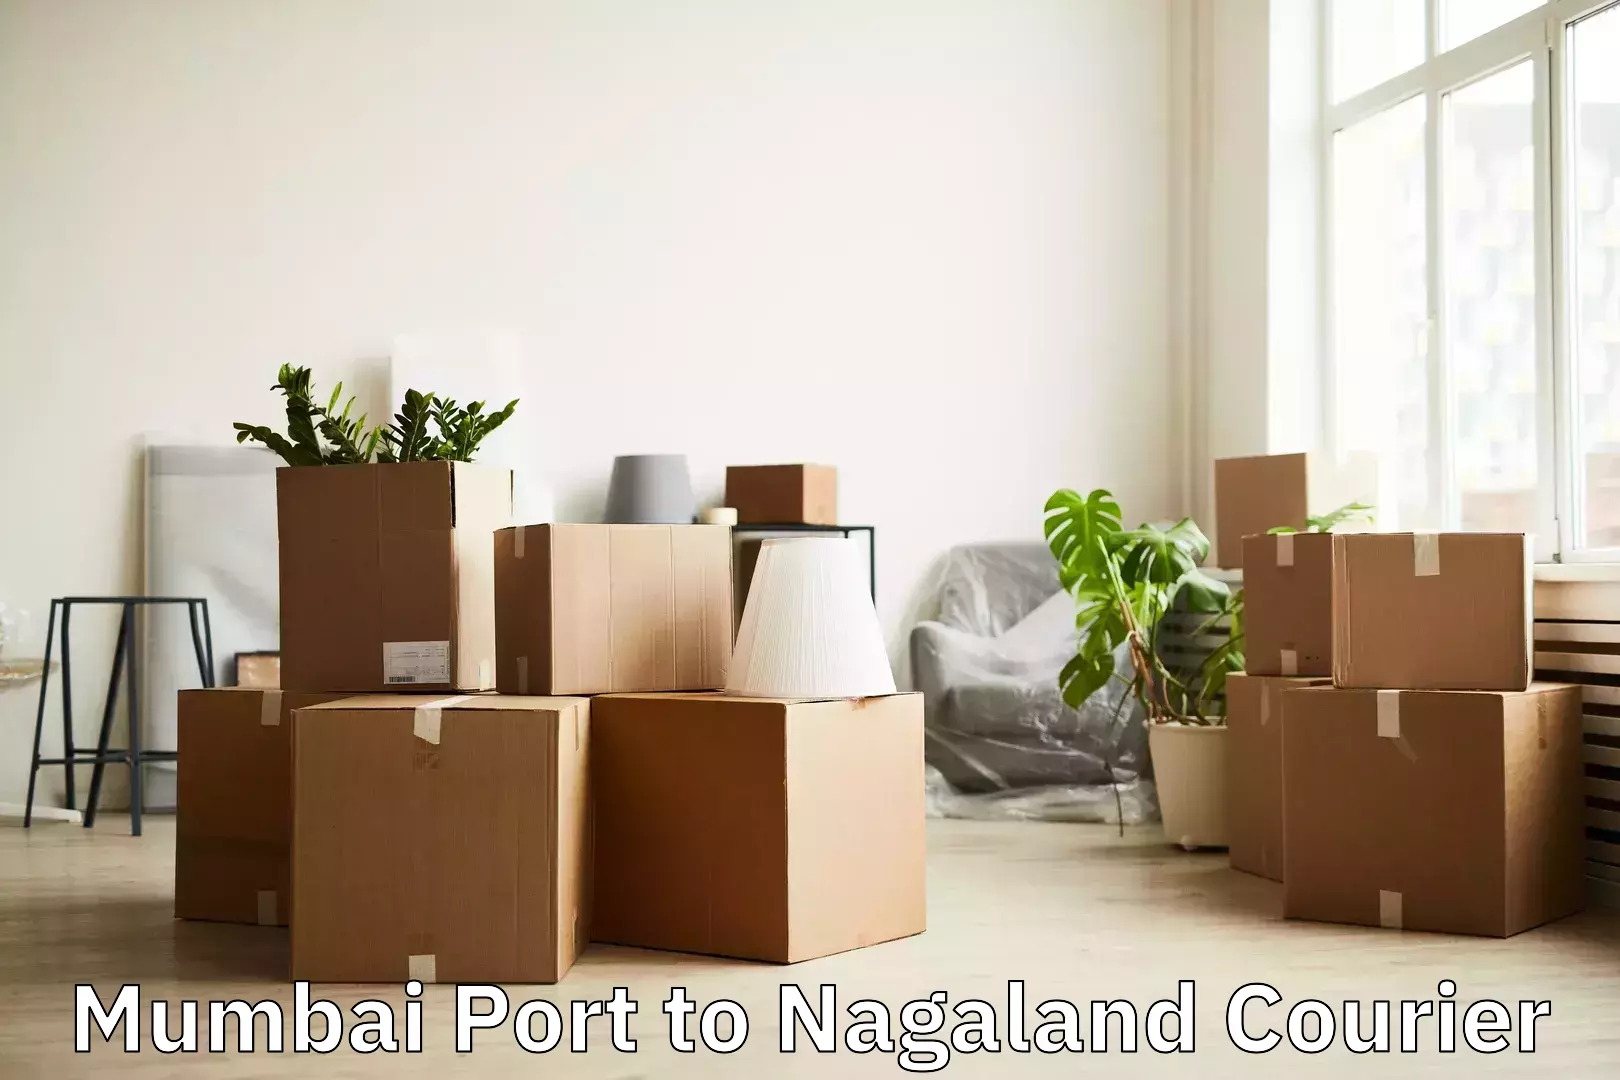 Luggage delivery app Mumbai Port to Nagaland